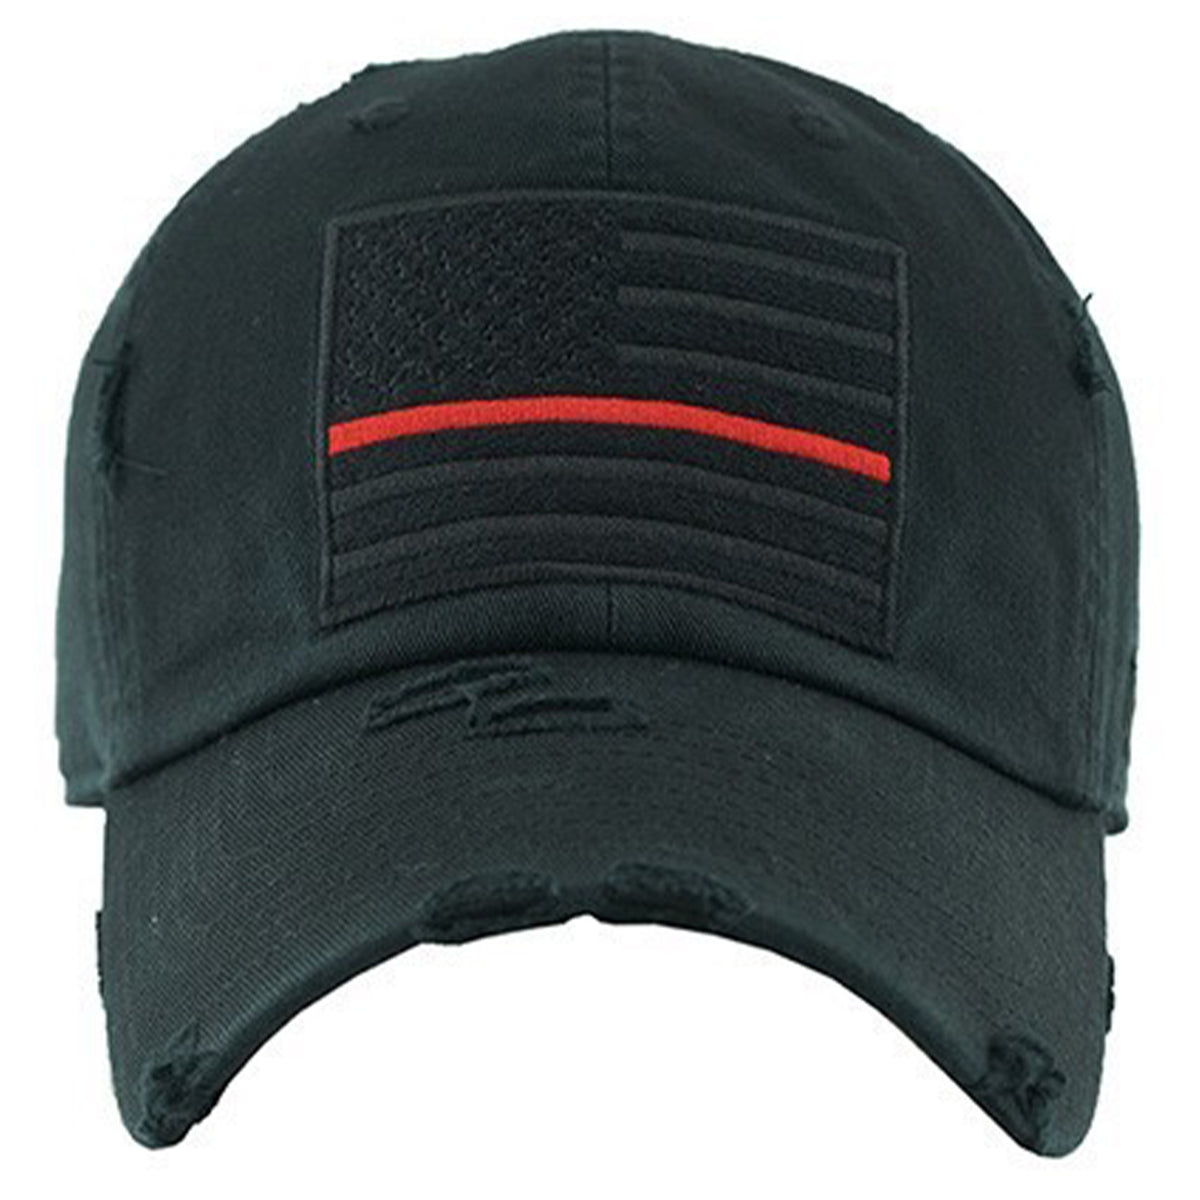 209 - American flag Hat - Black Red